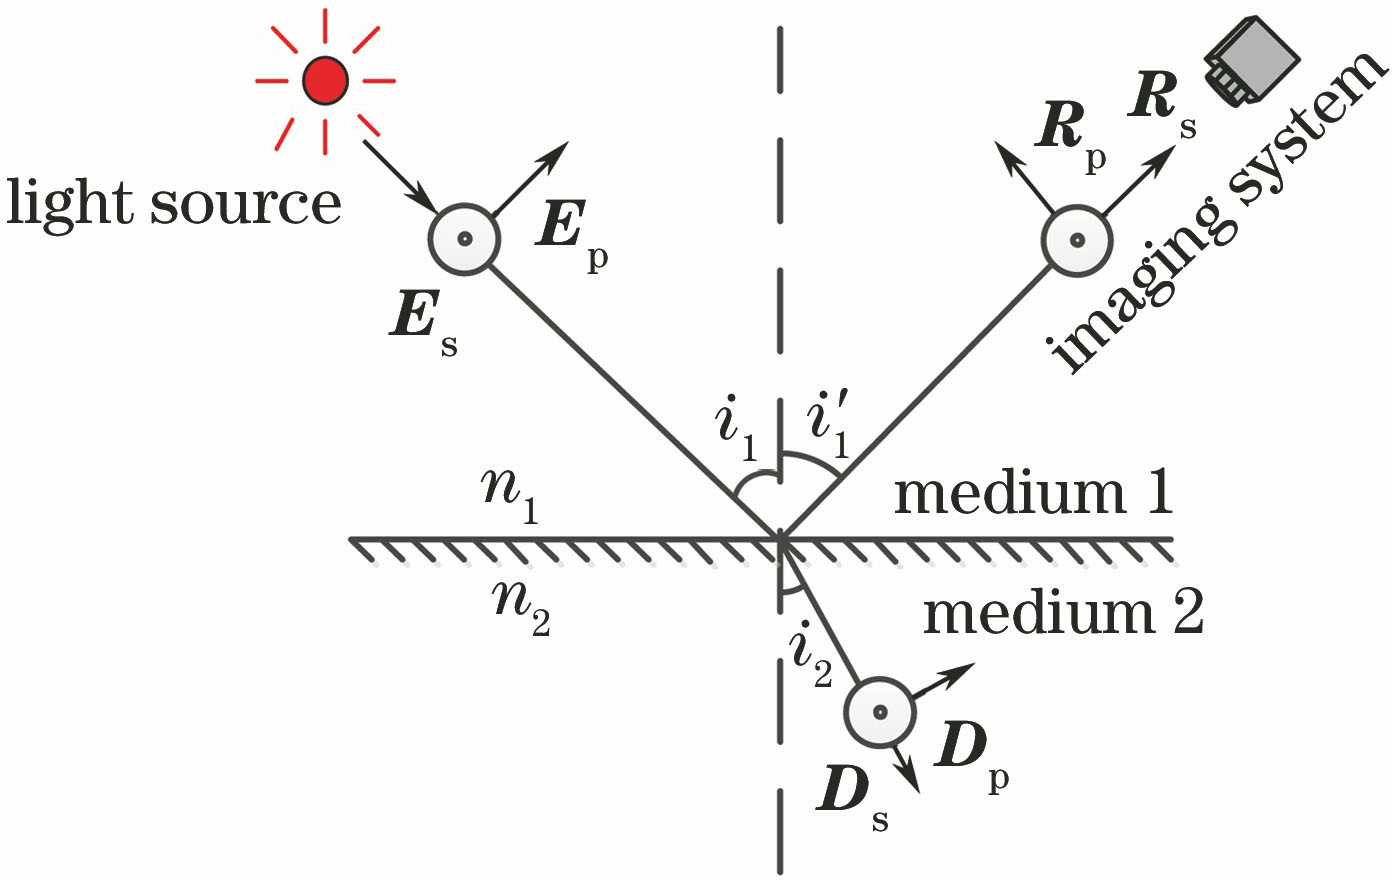 Model of reflected light polarization characteristics